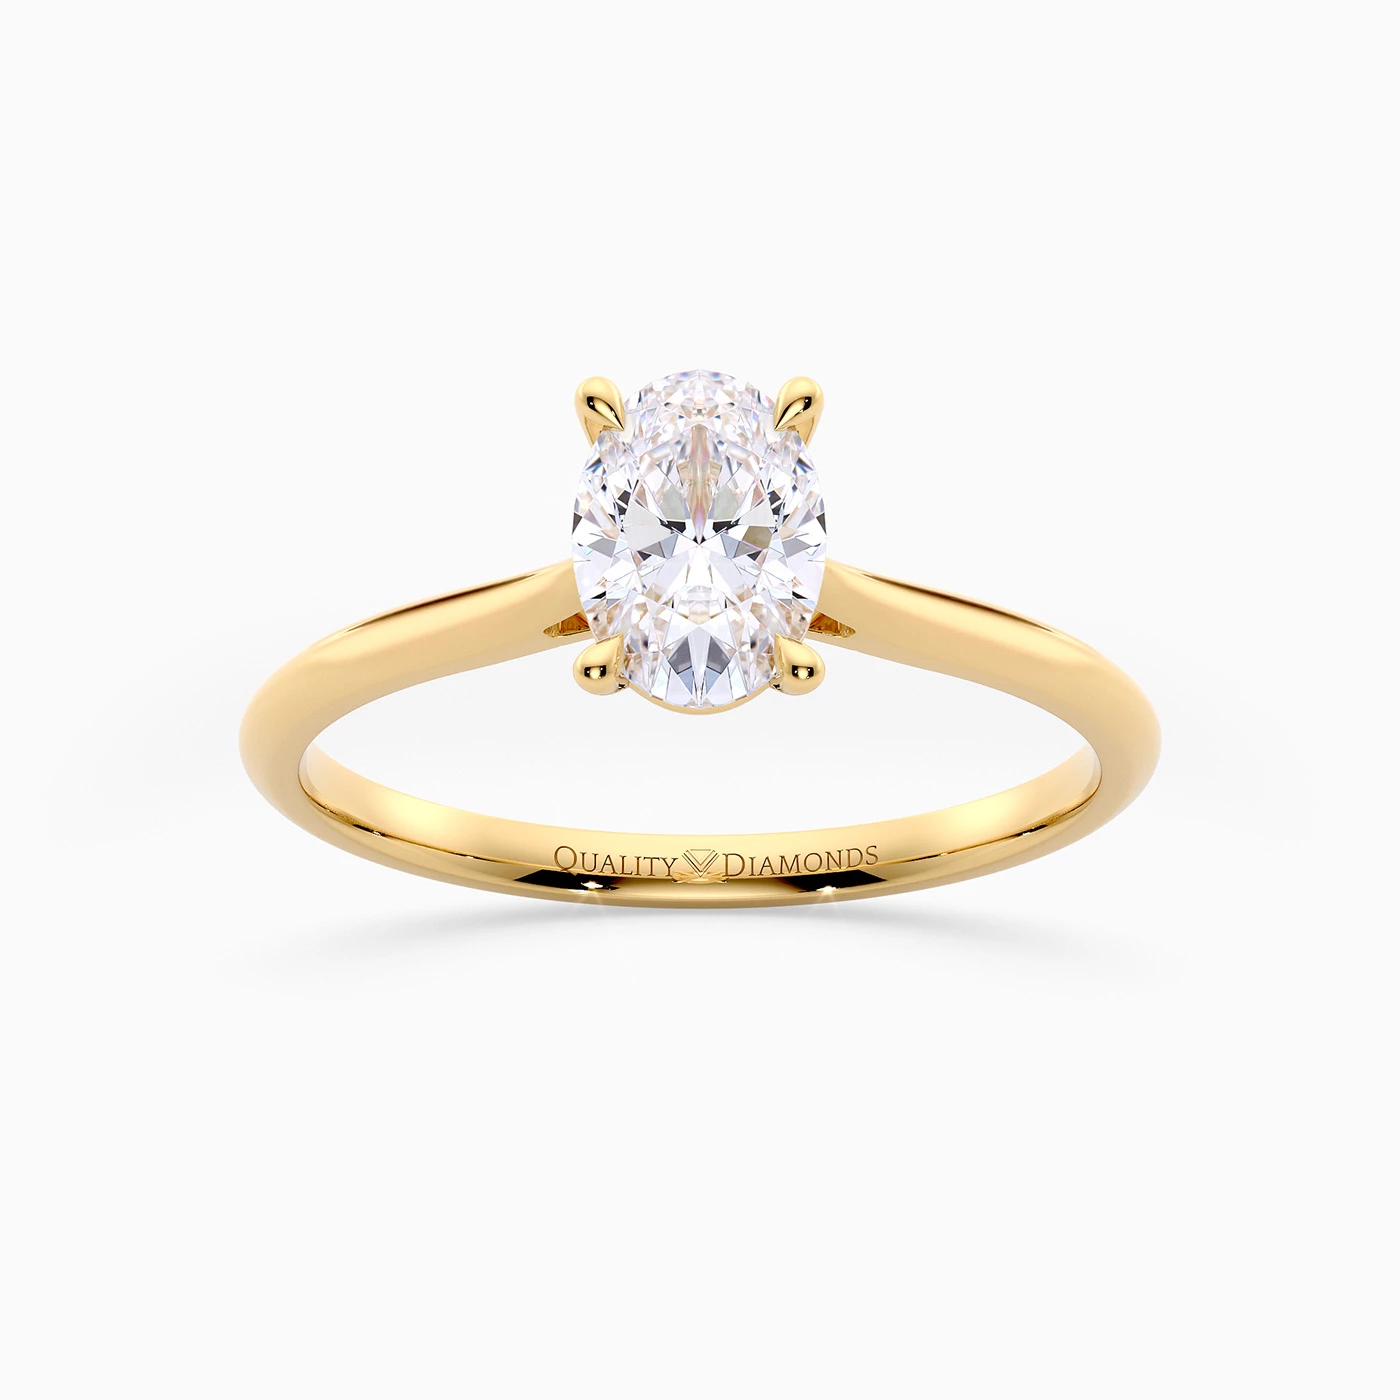 Oval Carys Diamond Ring in 9K Yellow Gold